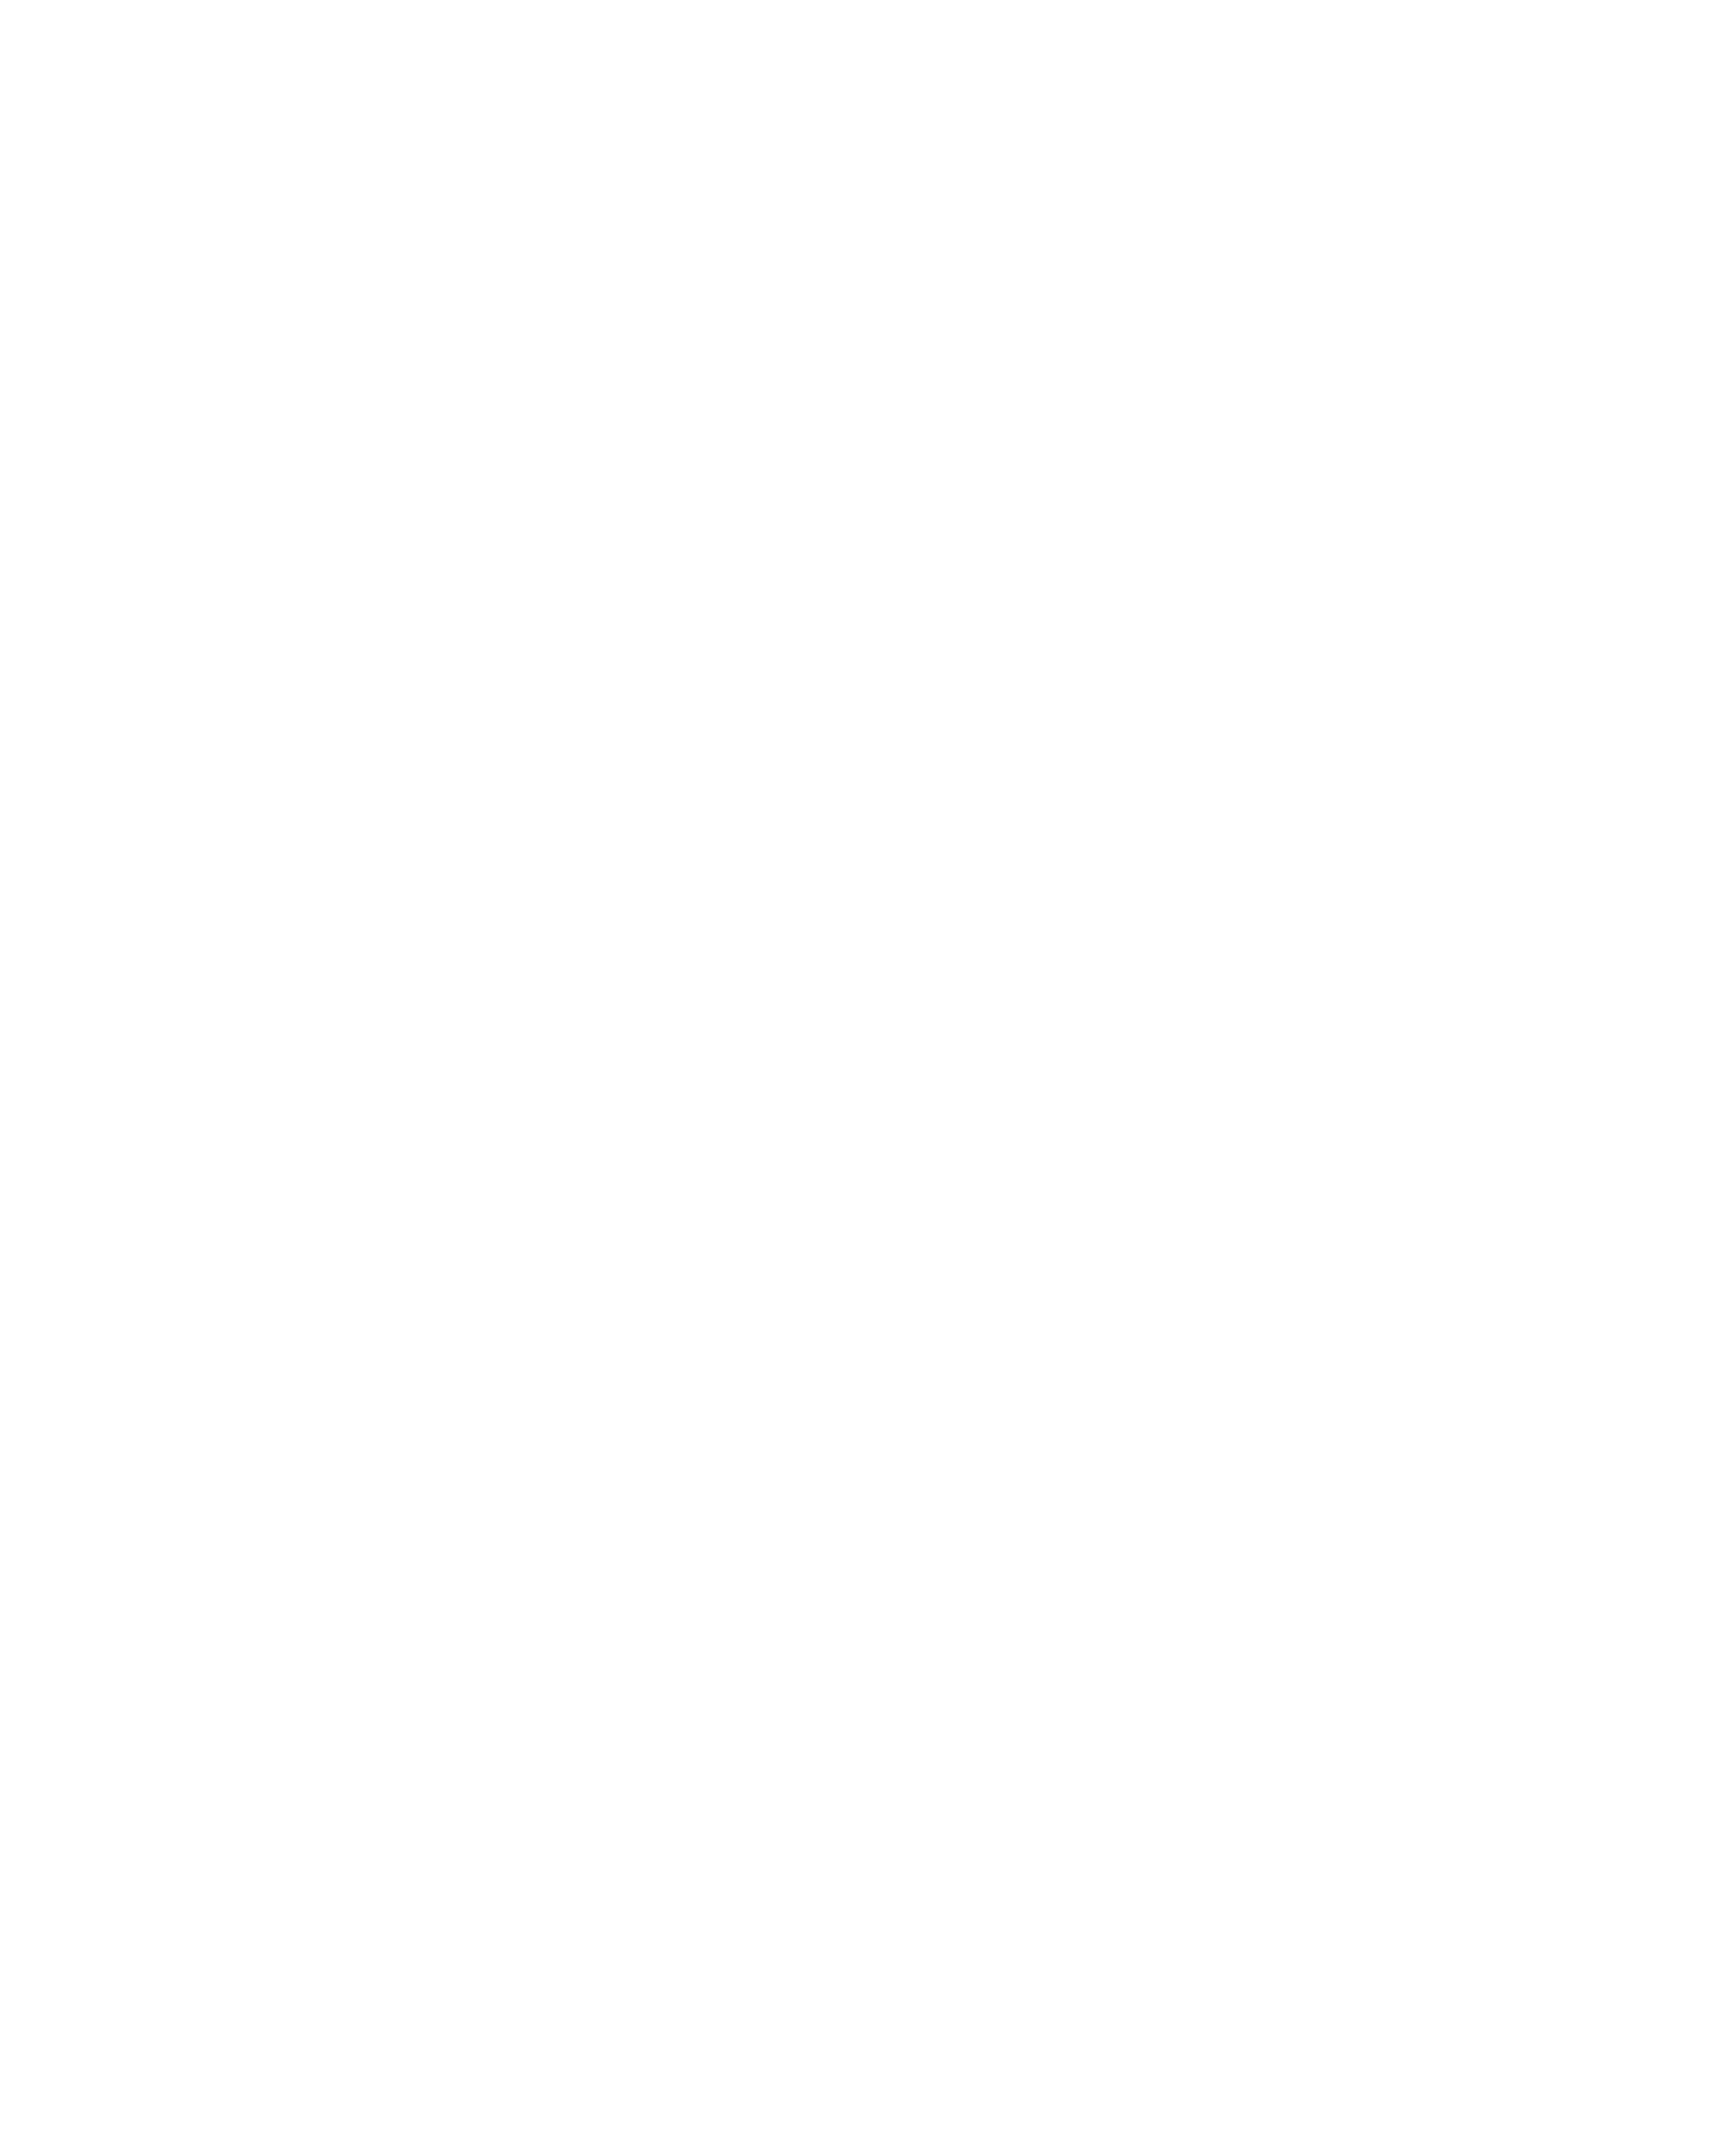 FSI logo white with transparent background